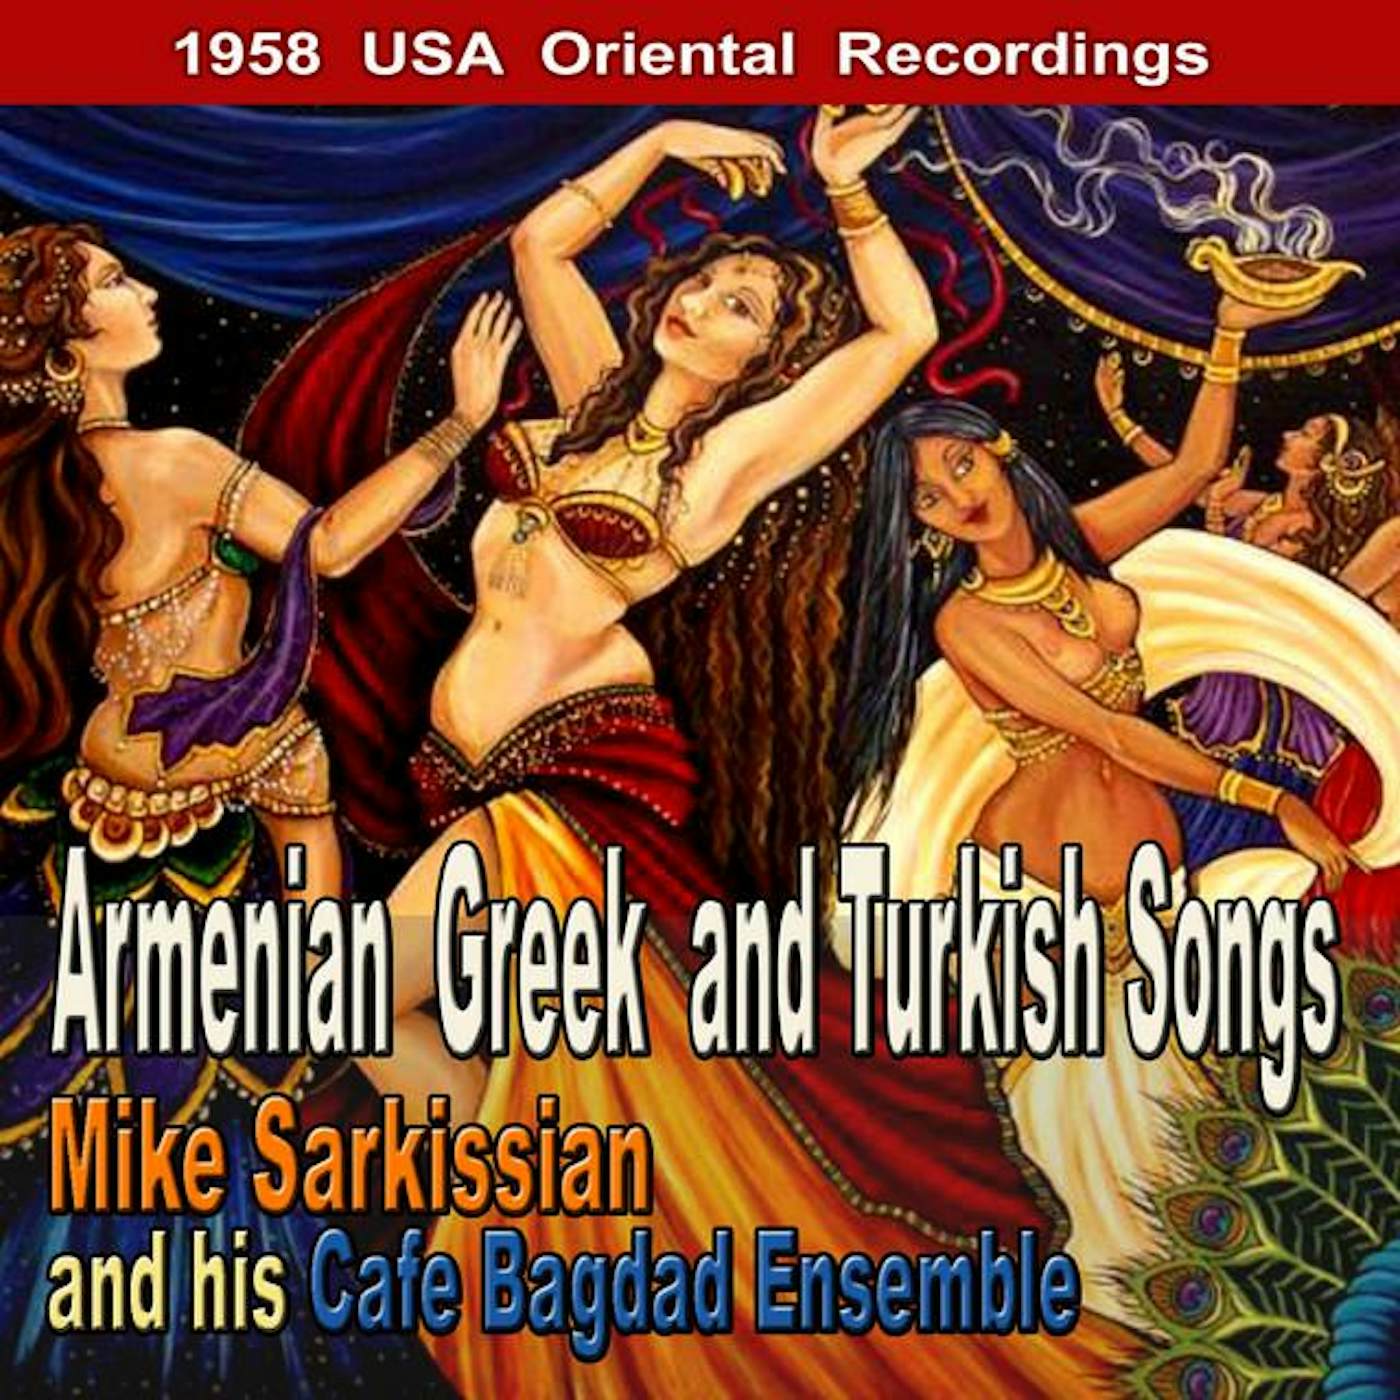 Mike Sarkissian